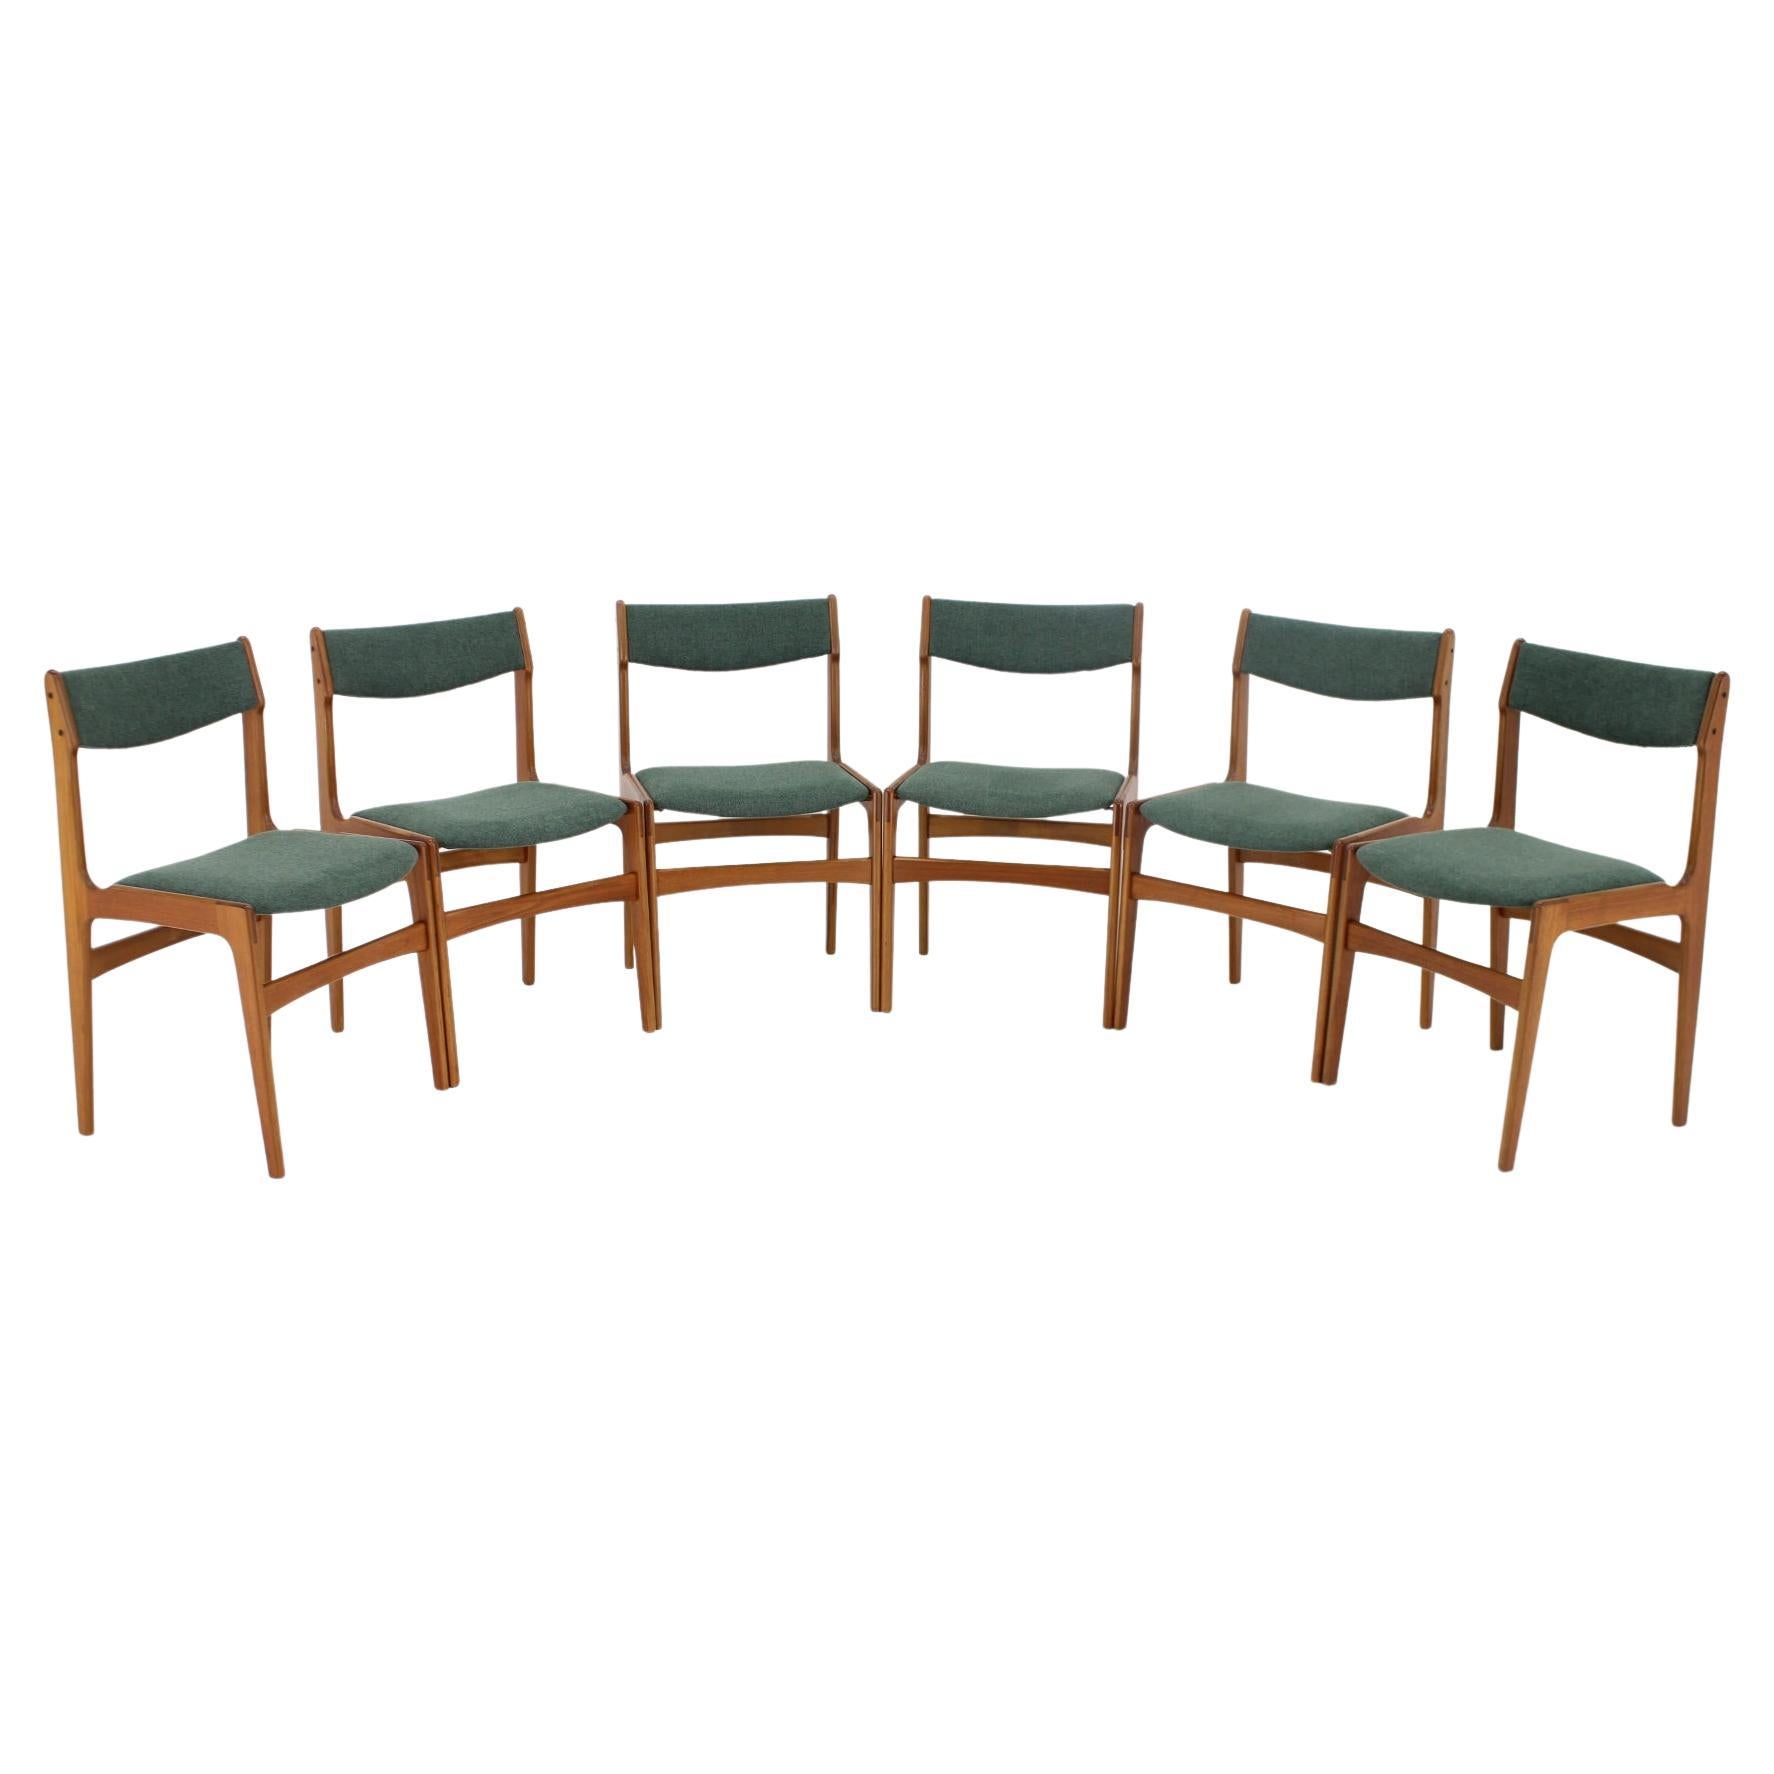 1960s Set of Six Teak Dining Chairs, Denmark